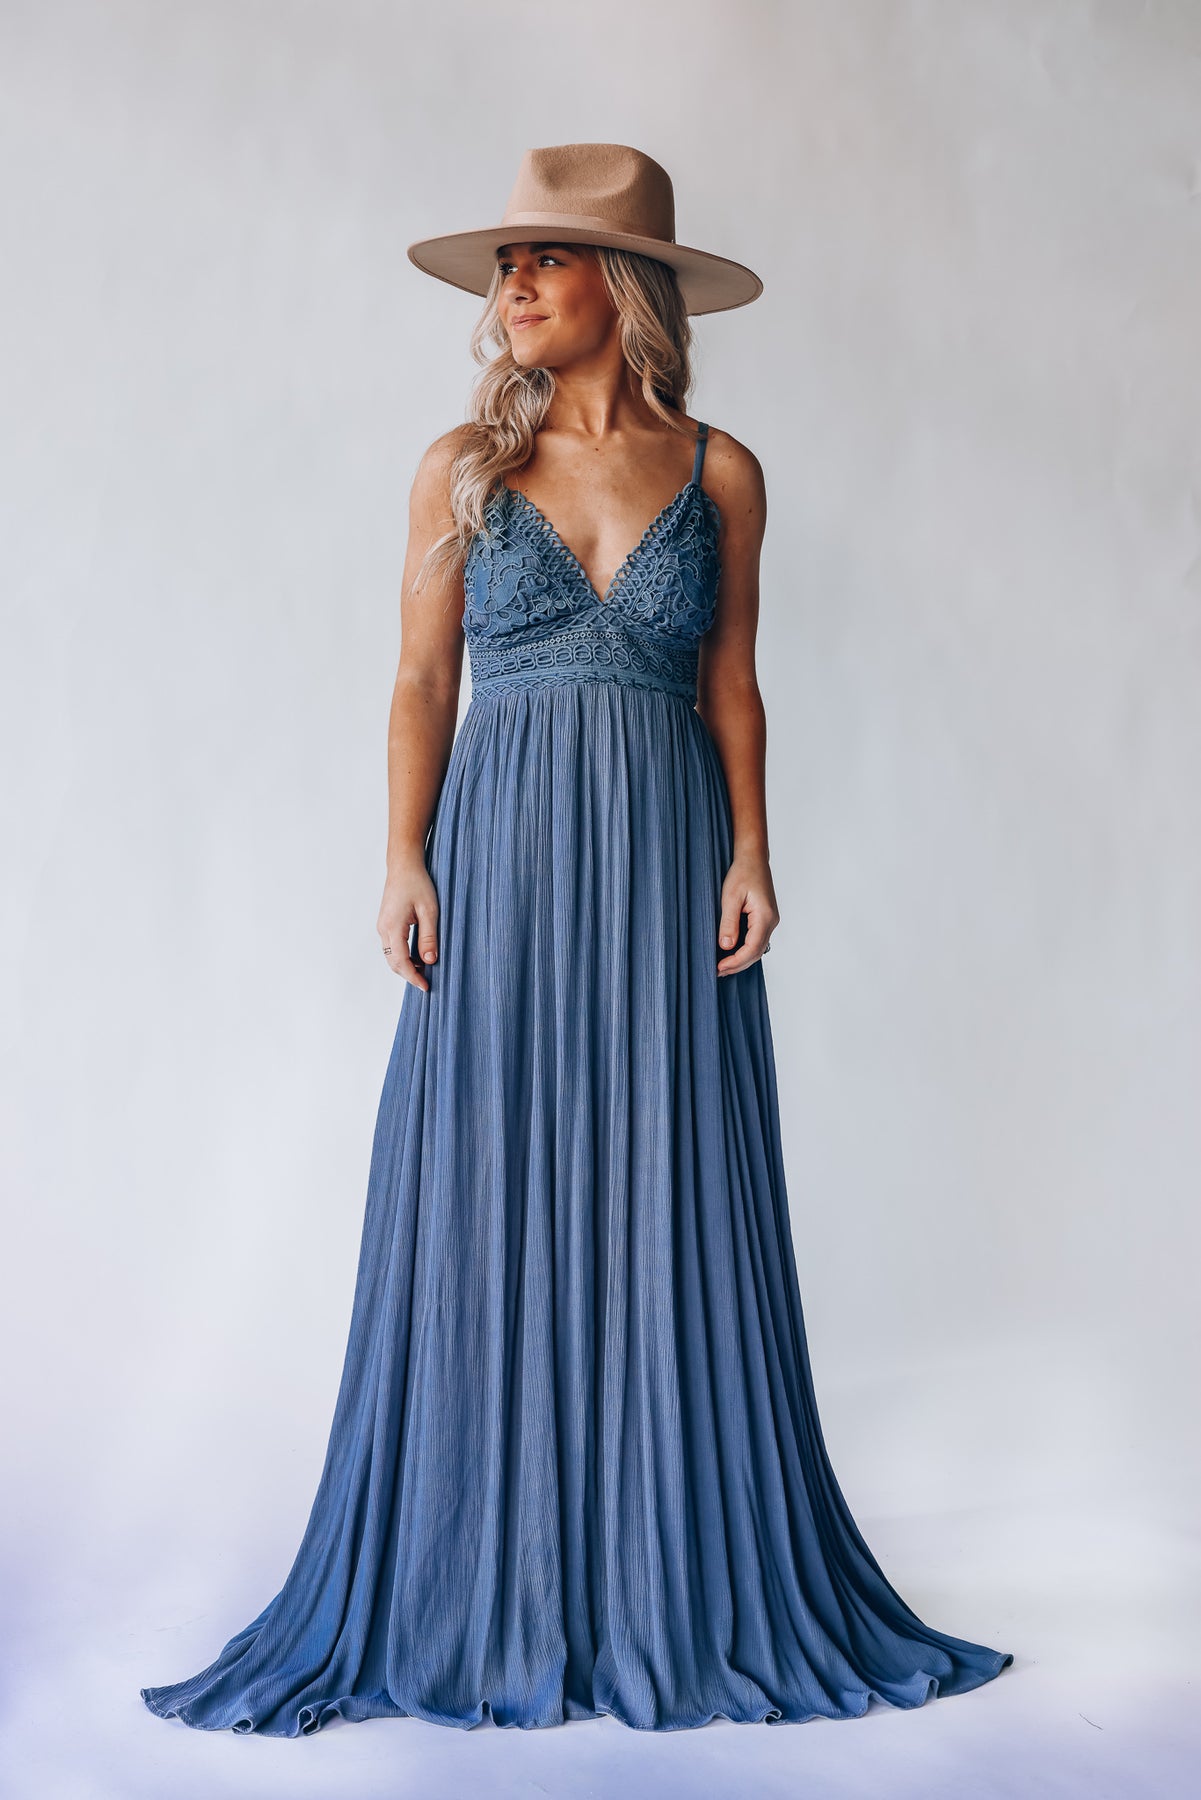 Wanderlust Maxi Dress (Denim Blue) Southern – Alternative